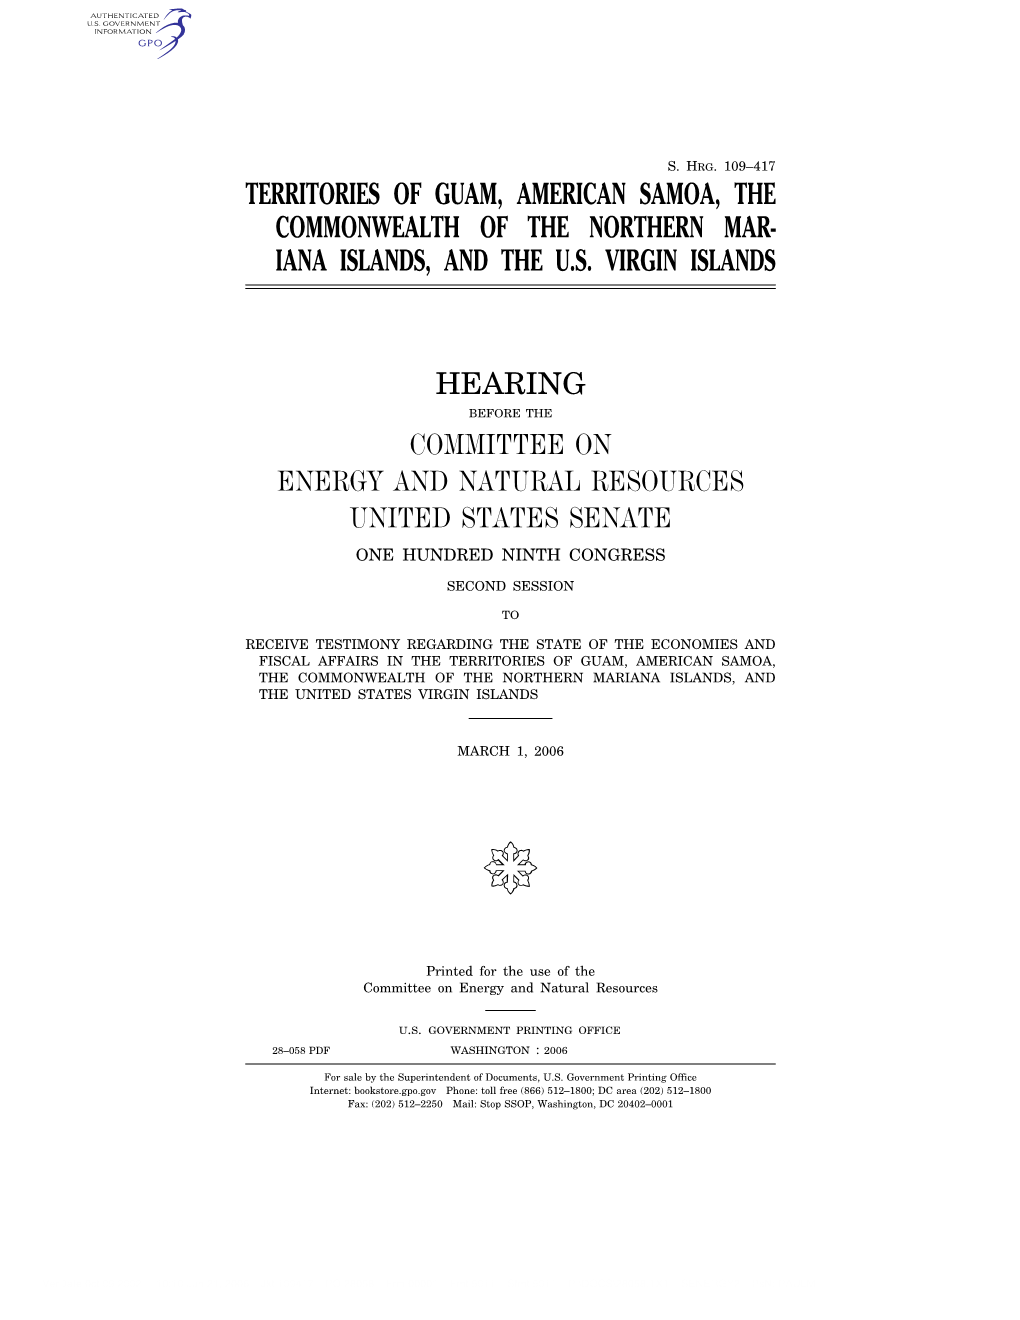 Territories of Guam, American Samoa, the Commonwealth of the Northern Mar- Iana Islands, and the U.S